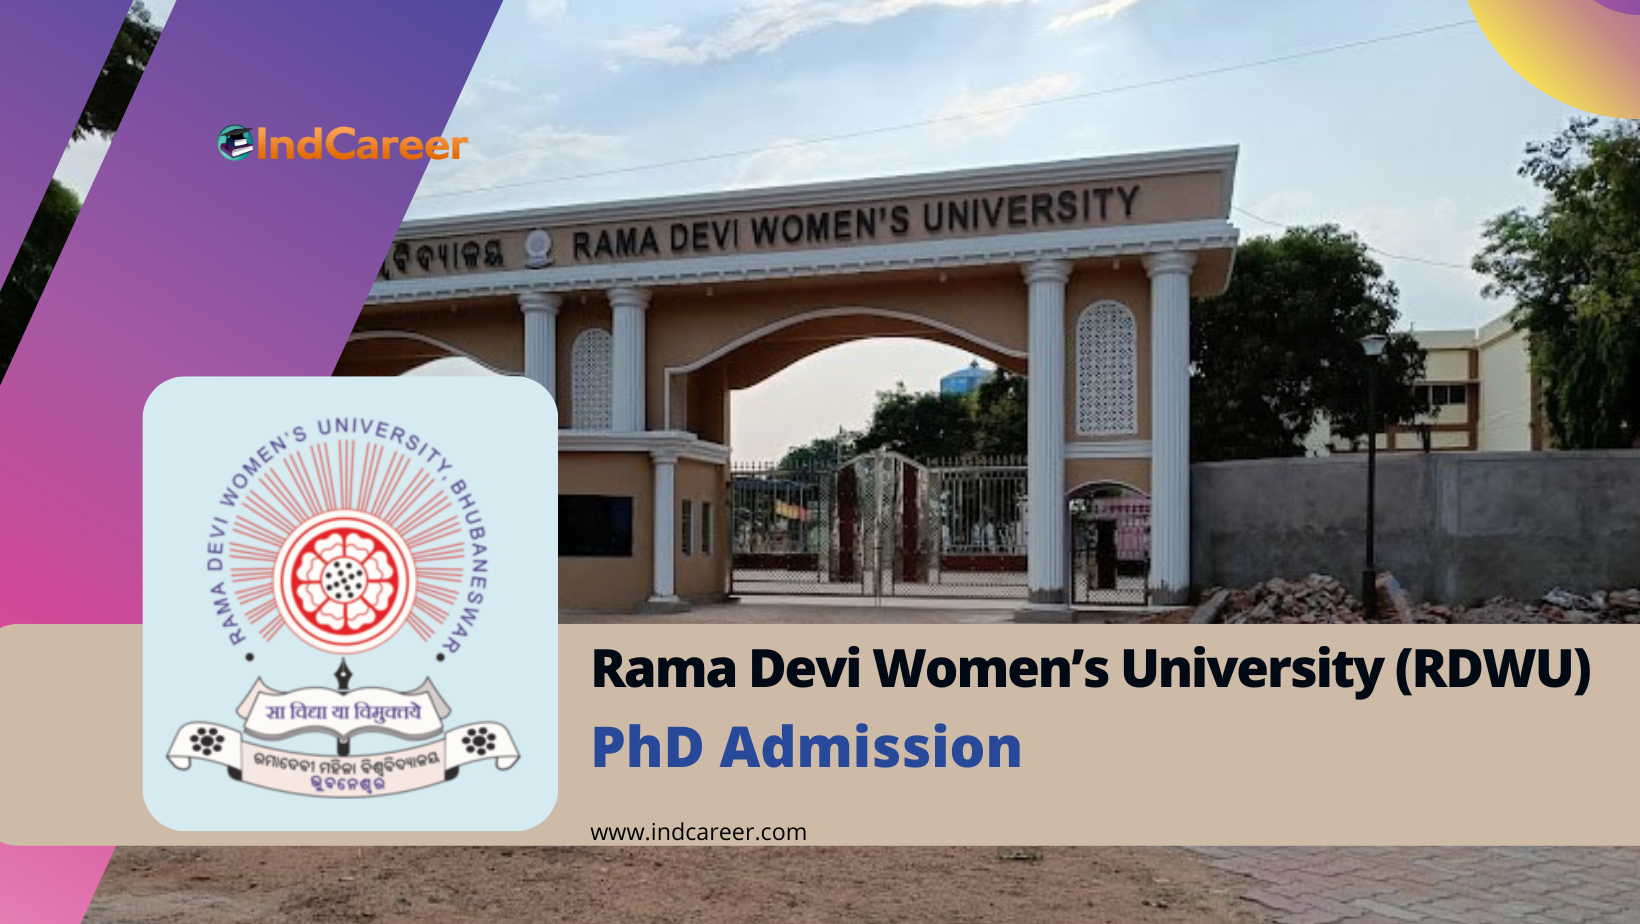 Day 2 of Odisha... - RDWU - Rama Devi Women's University Off. | Facebook